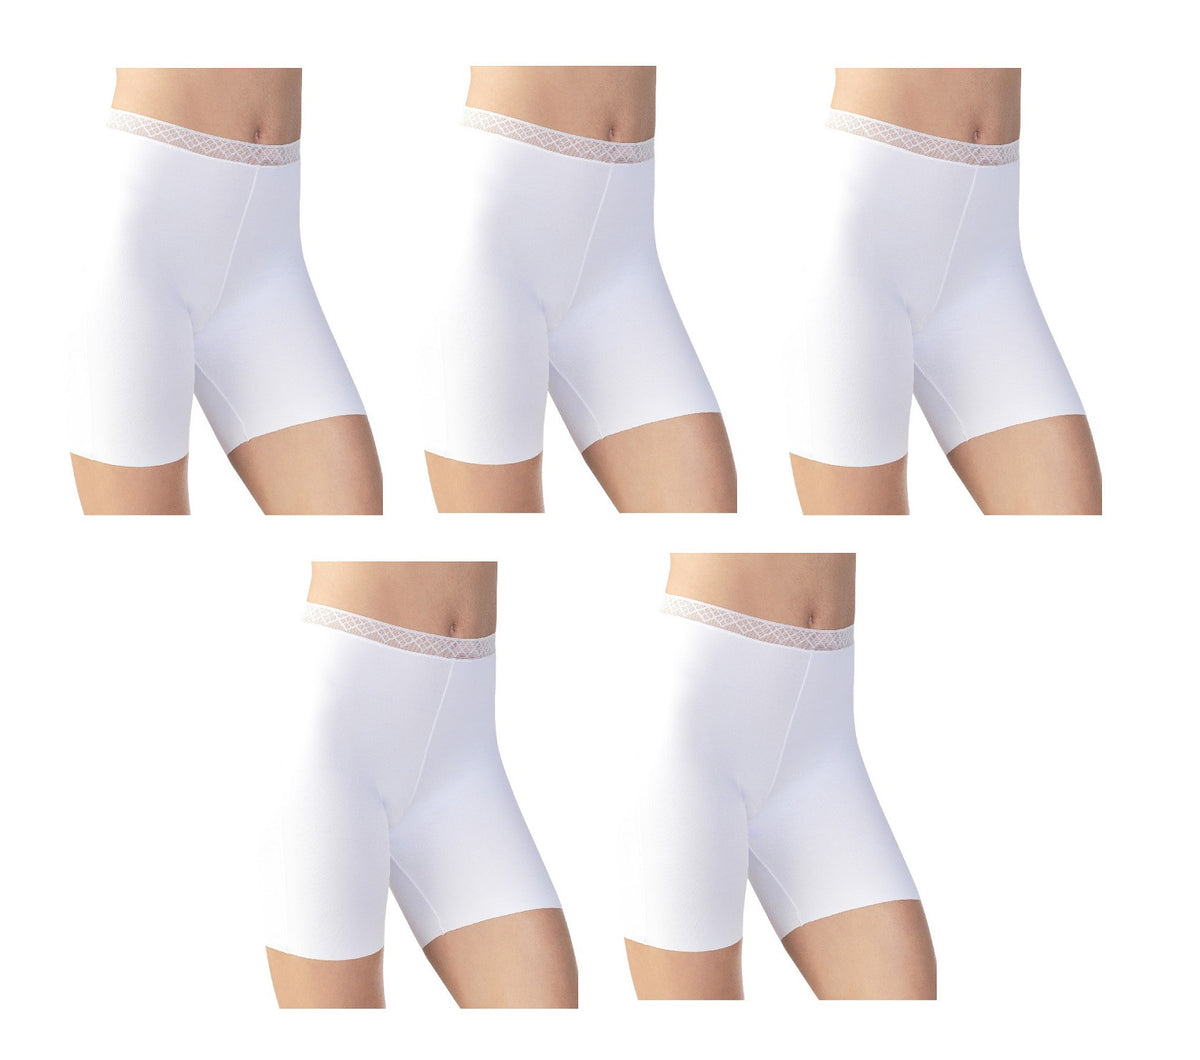 Vassarette Women's Invisibly Smooth Slip Short Panty, White ,Black